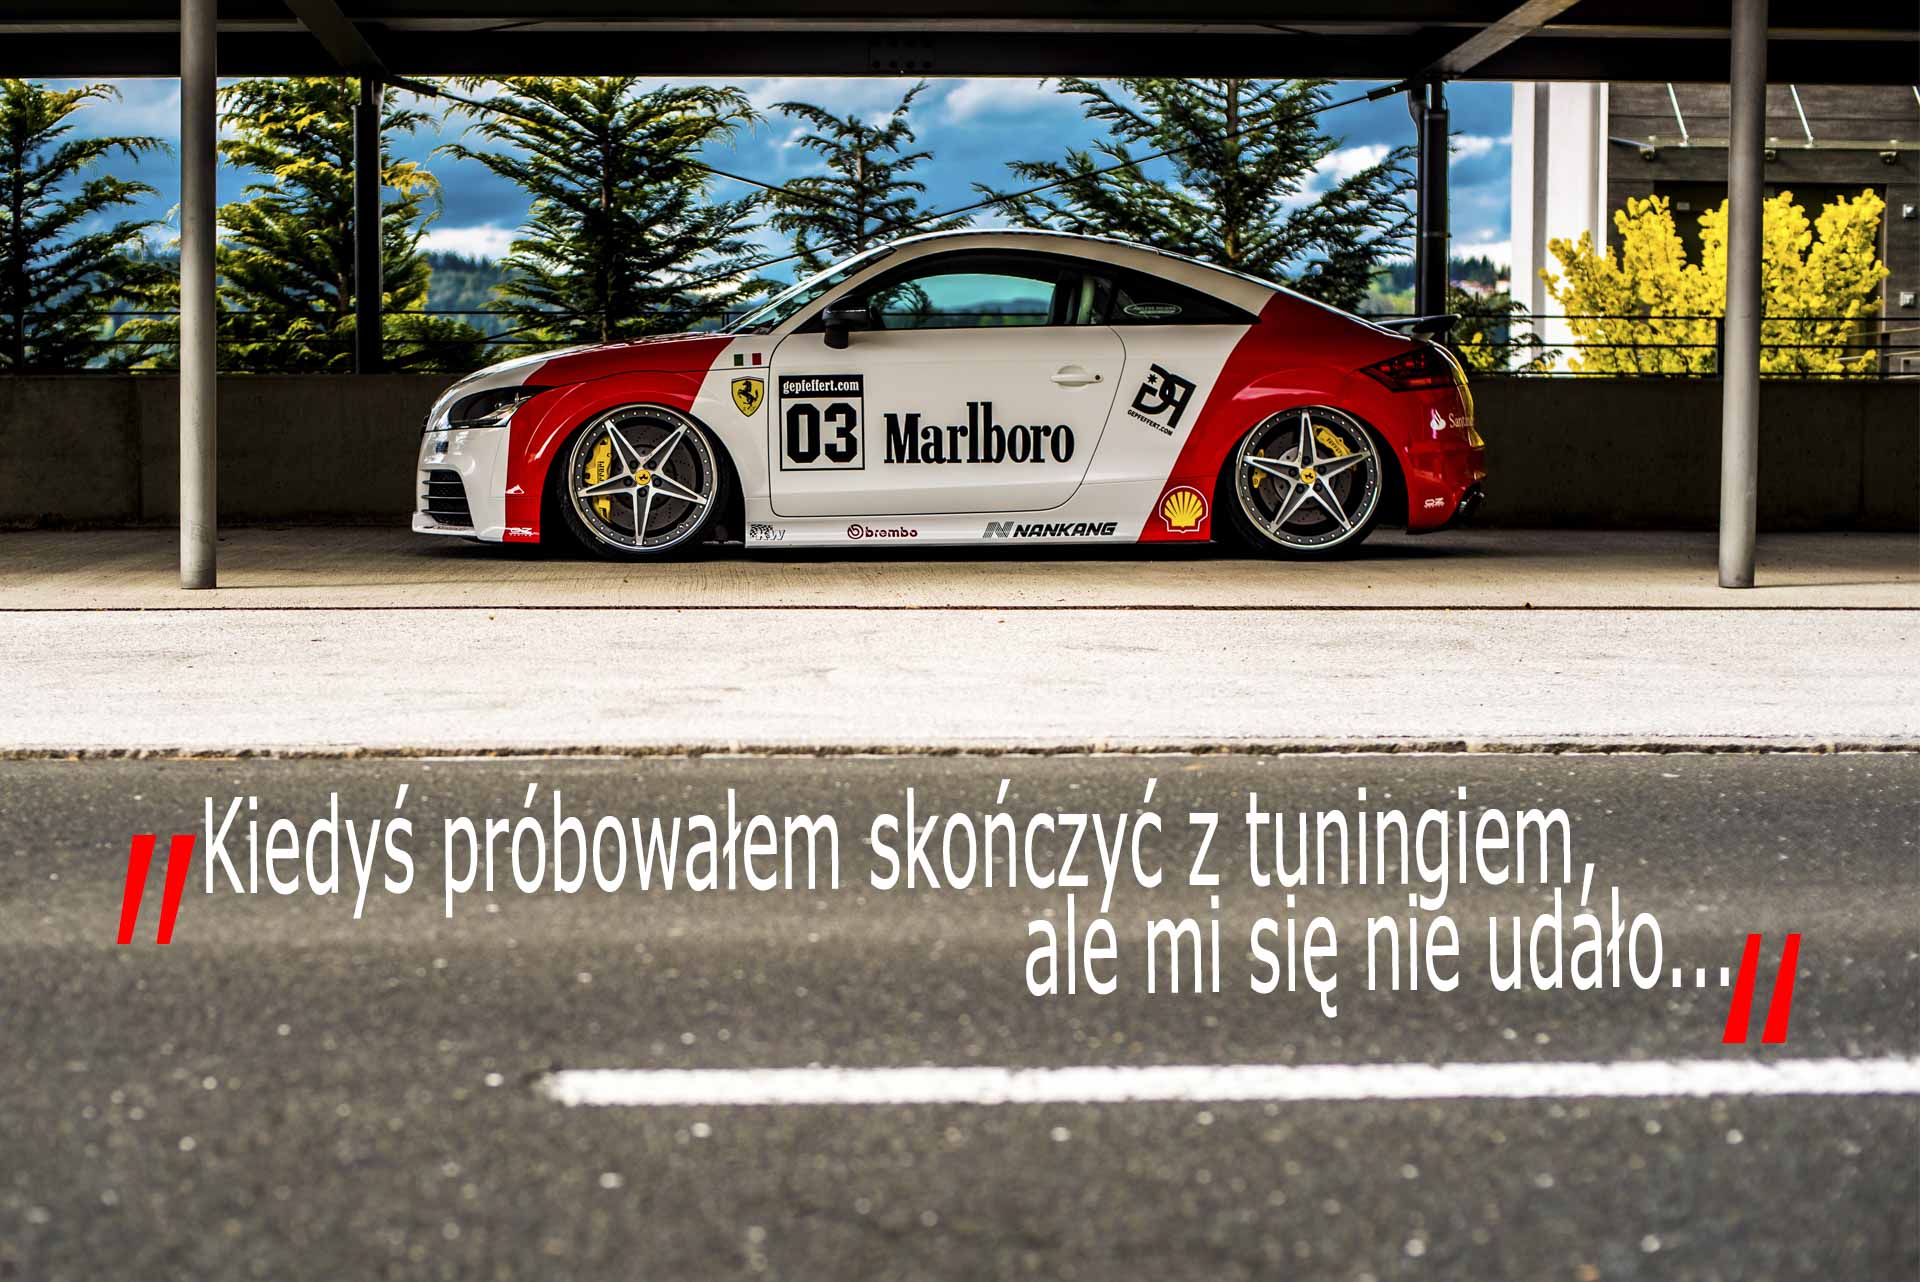 Audi TT RS Marlboro Gepfeffert